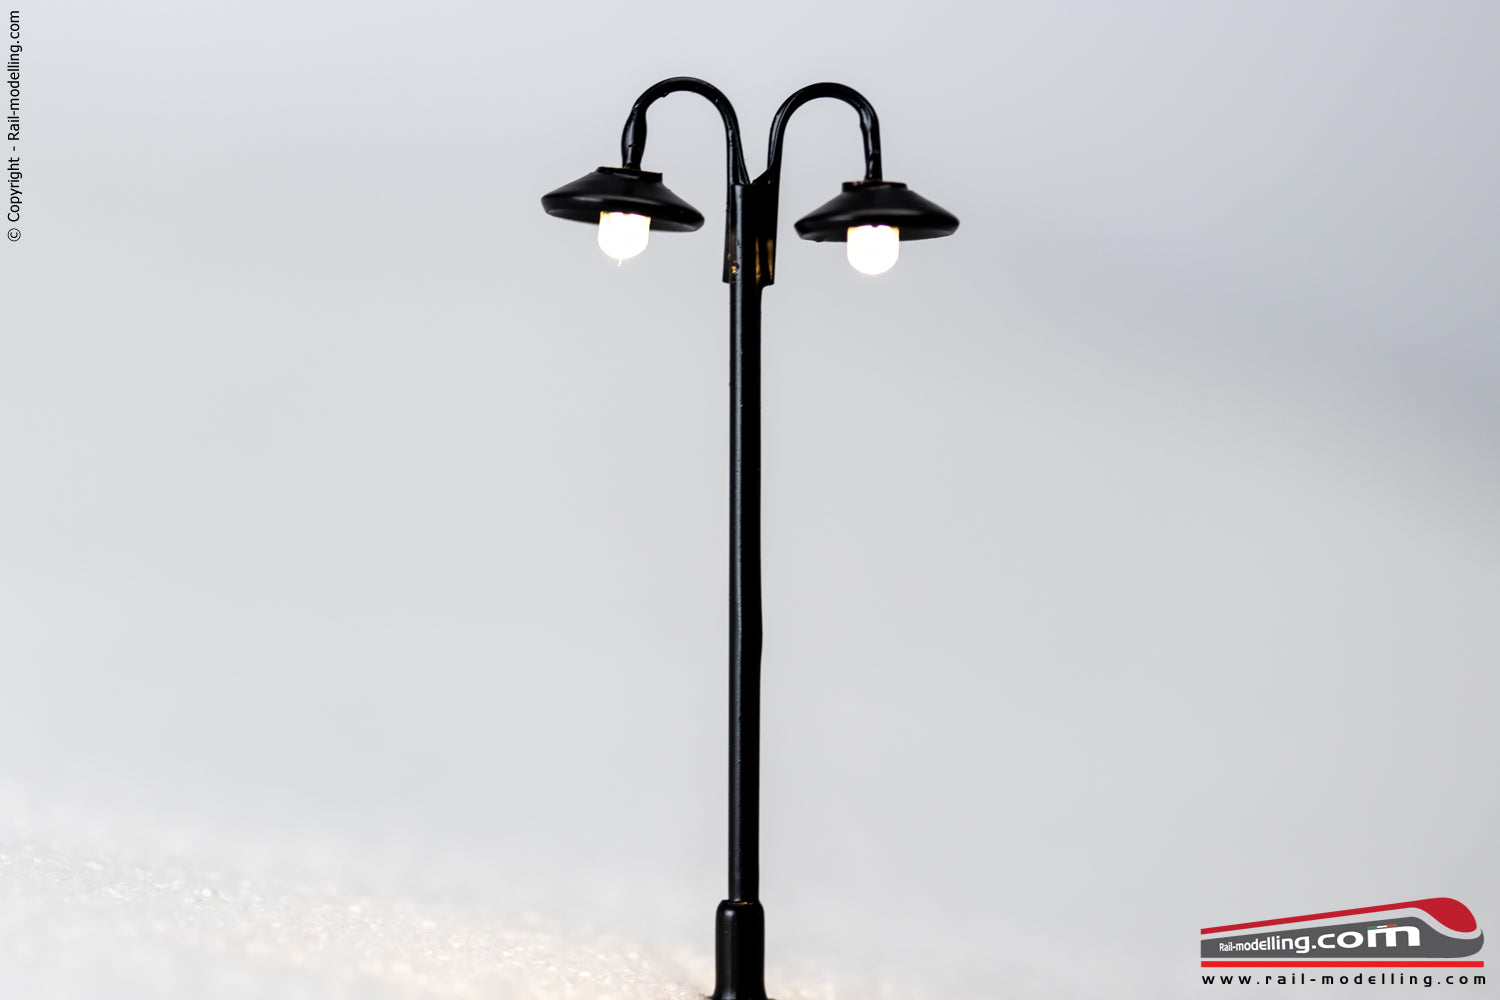 RAIL-MOD RM910 - H0 1:87 - Lampione urbano 14 cm a due lampade con micro led luce calda